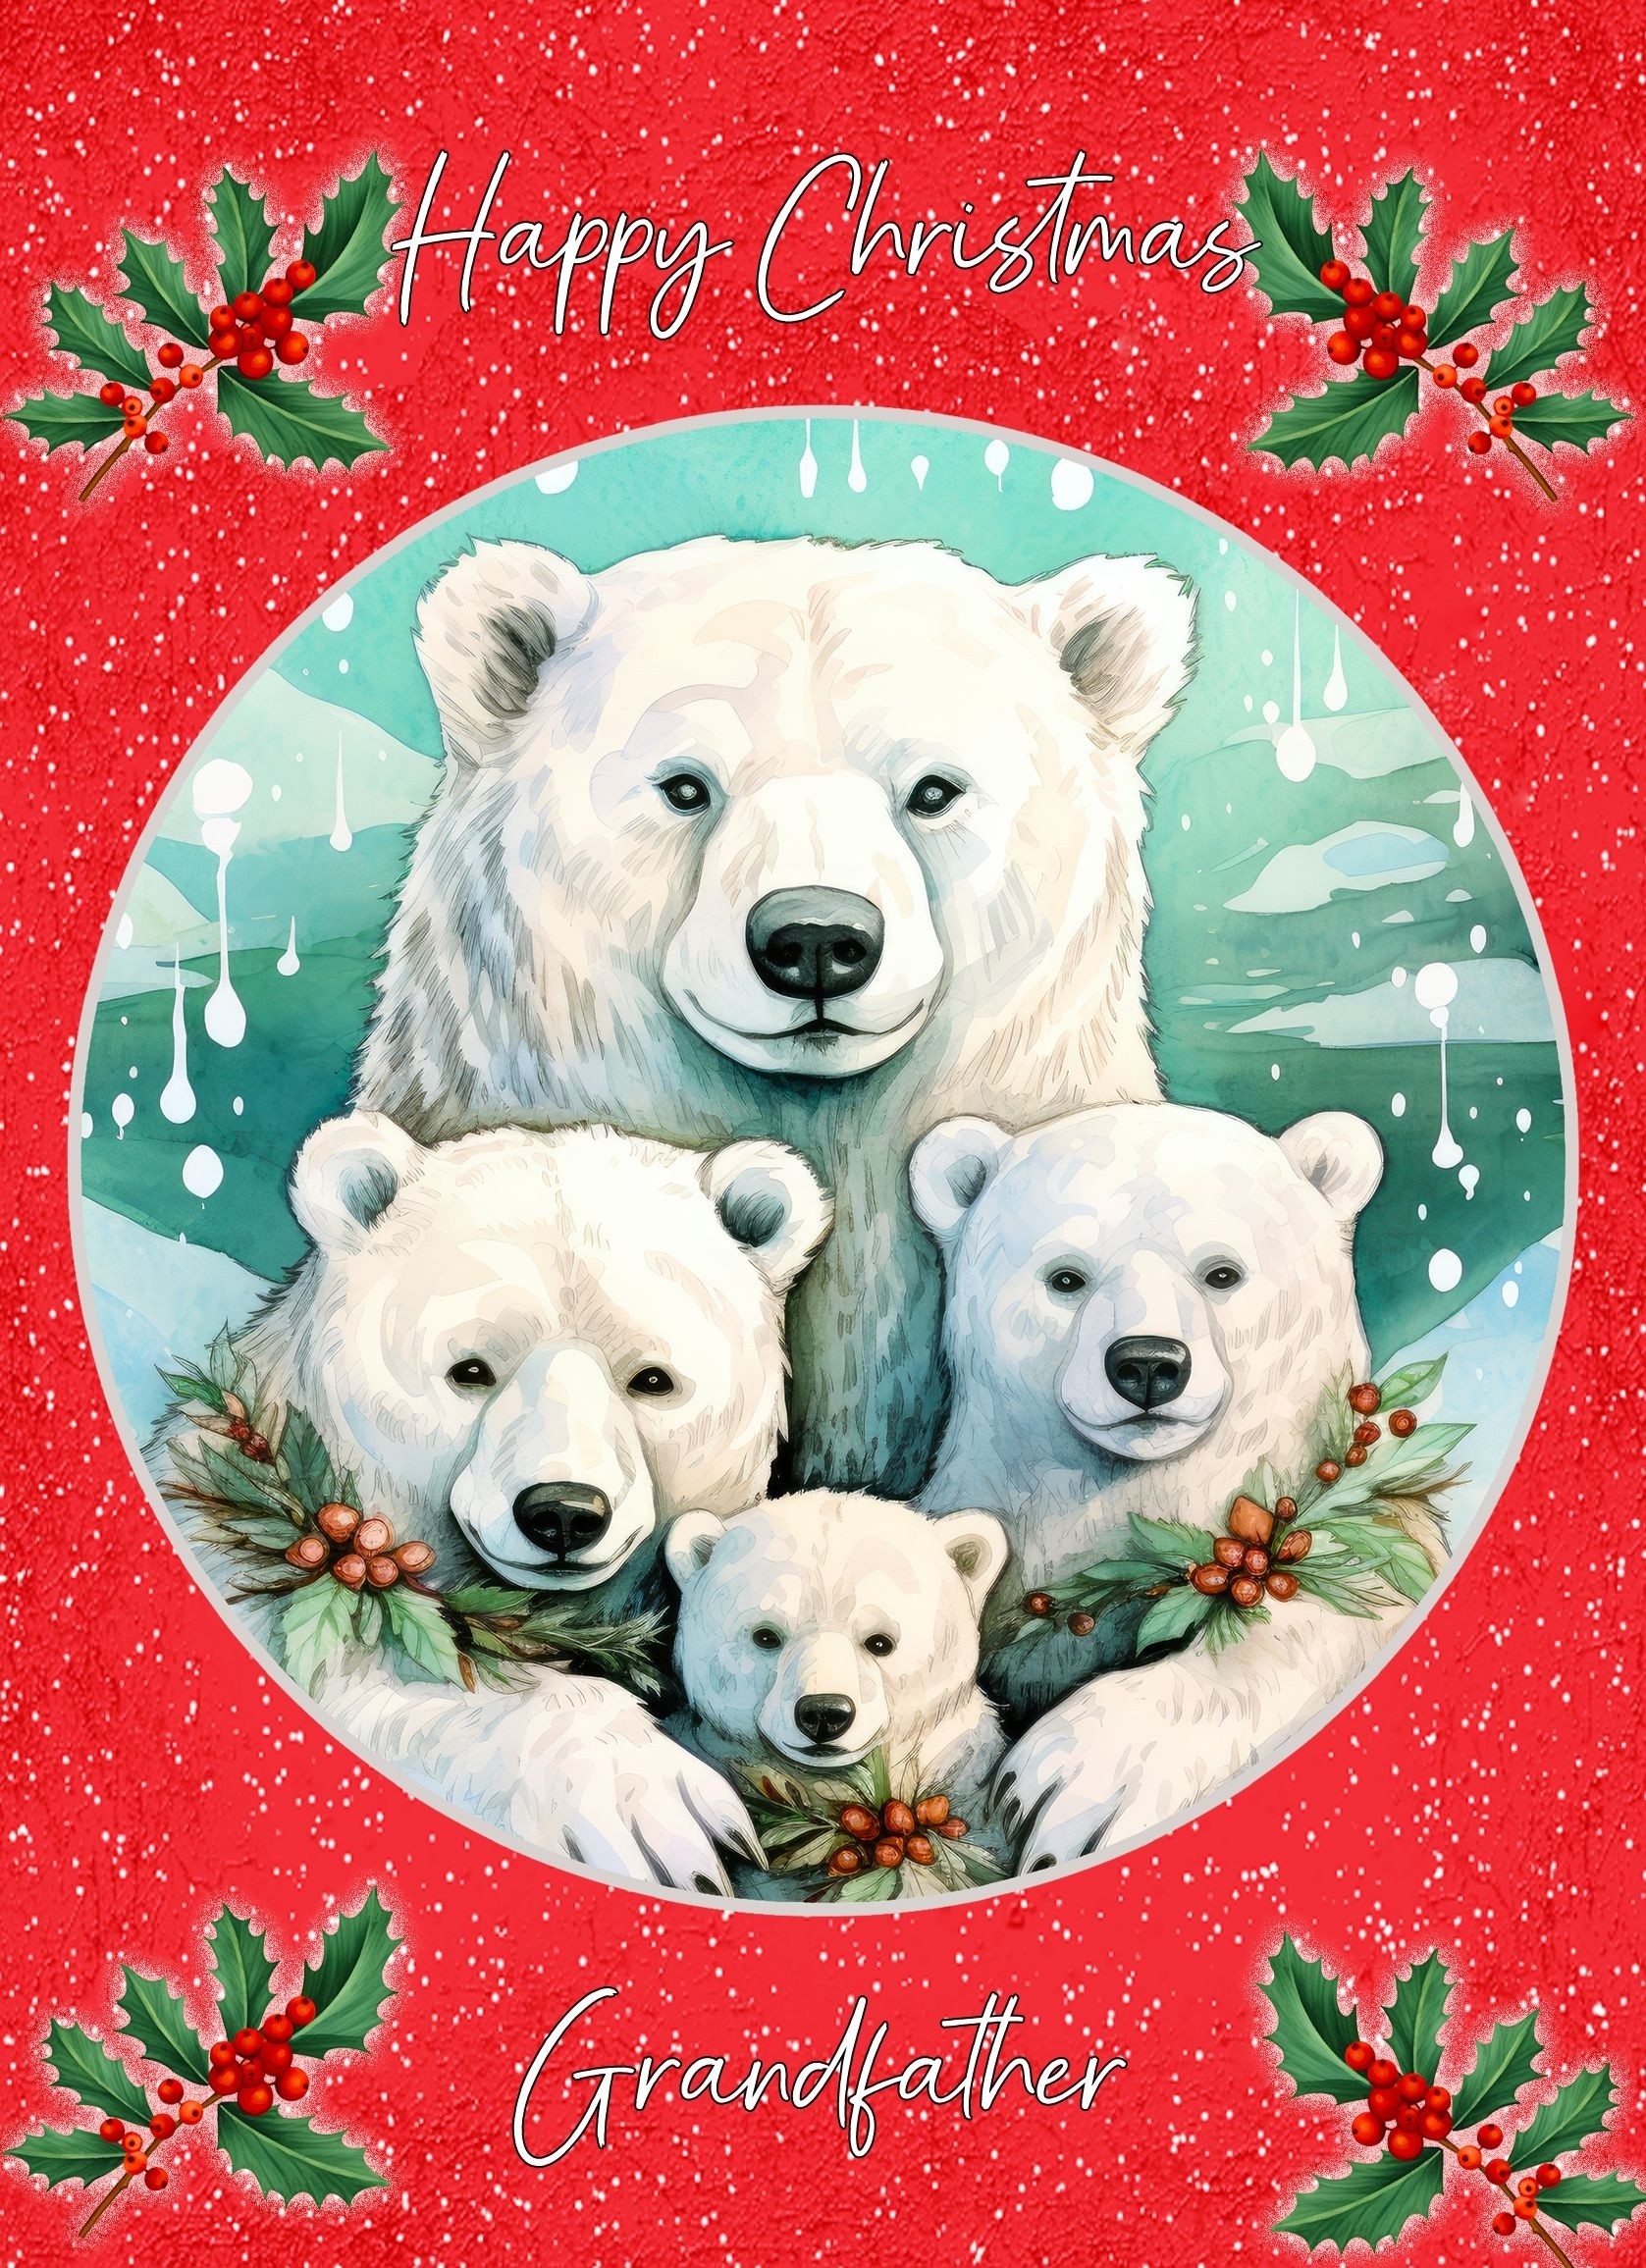 Christmas Card For Grandfather (Globe, Polar Bear Family)